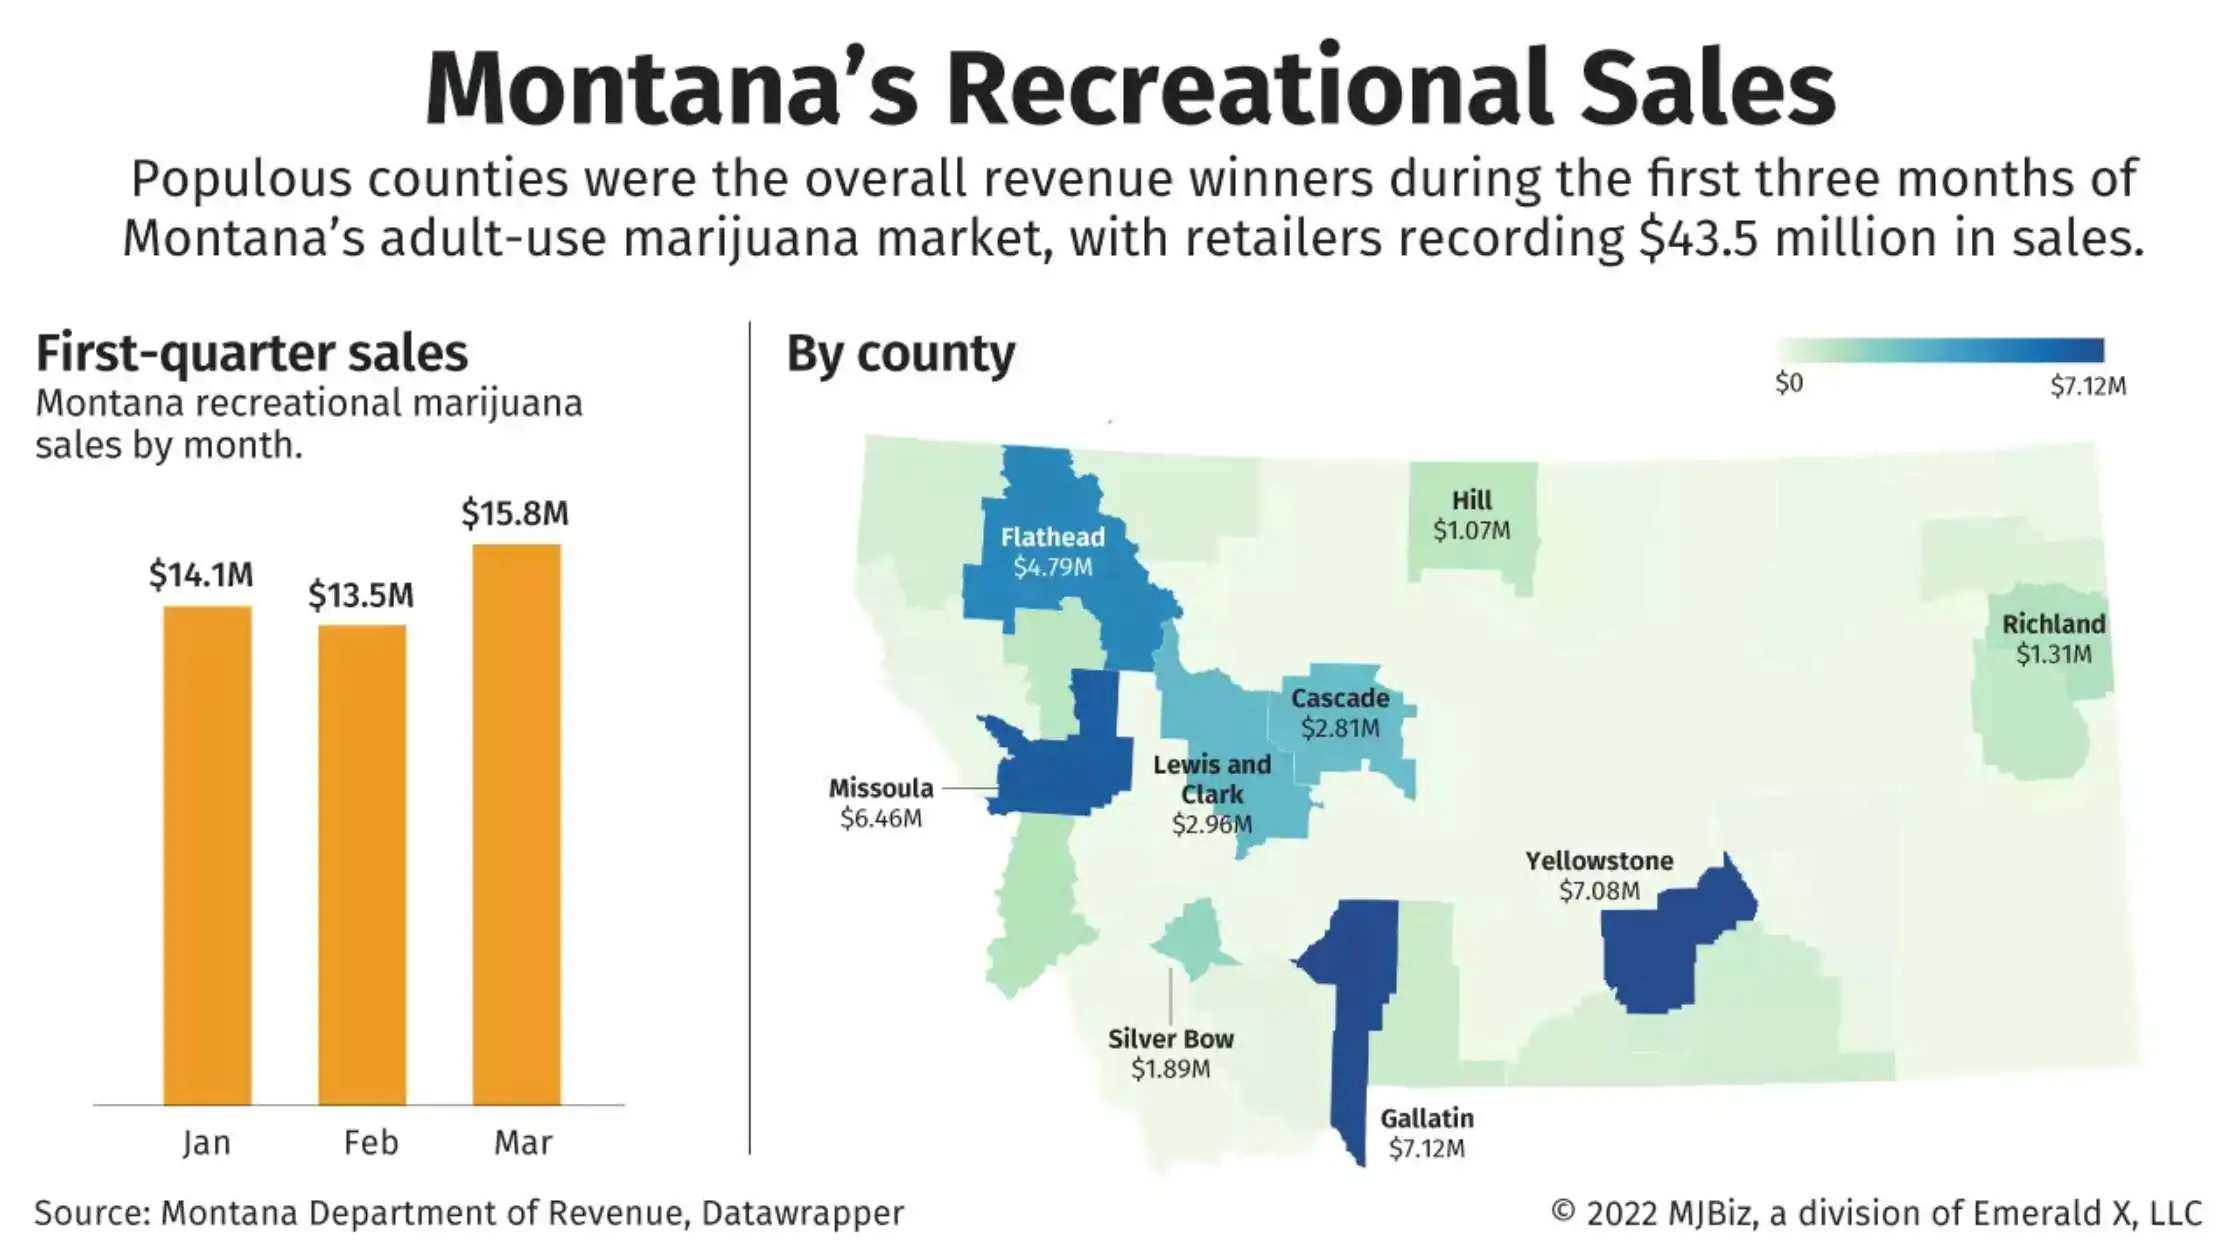 Regional Politics May Hinder Montana’s Recreational Cannabis Market